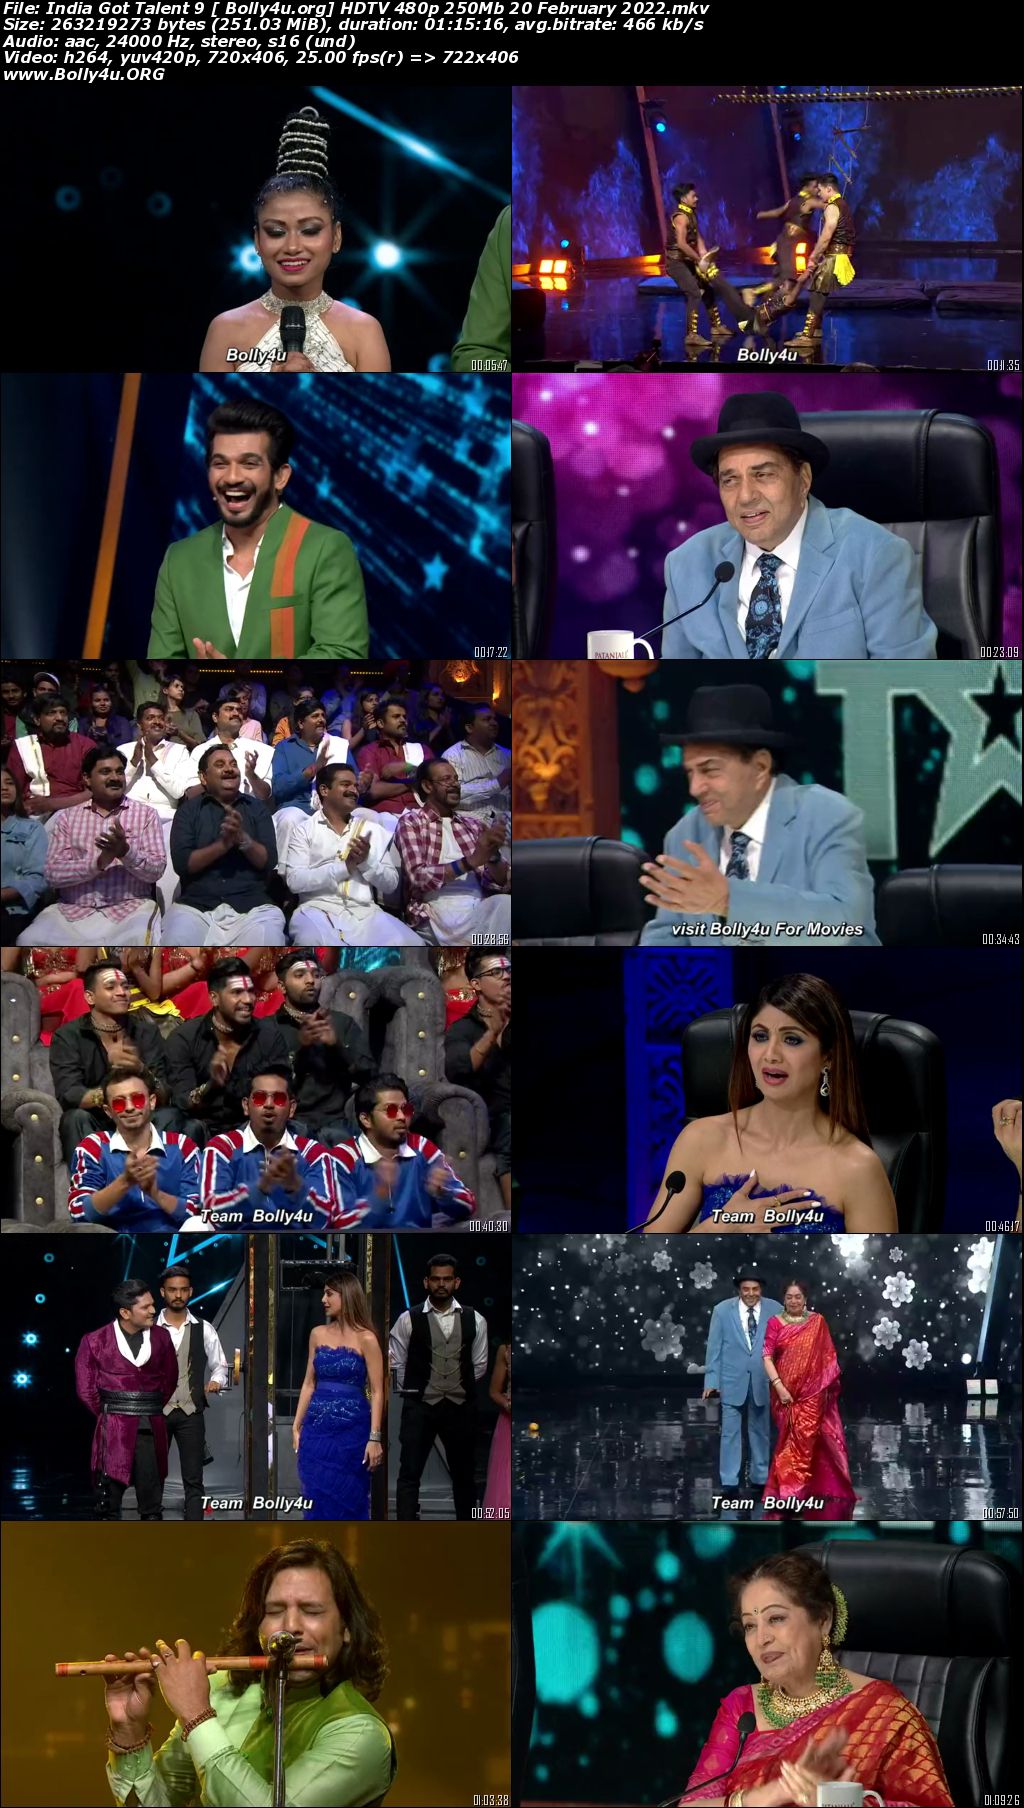 India Got Talent 9 HDTV 480p 250Mb 20 February 2022 Download